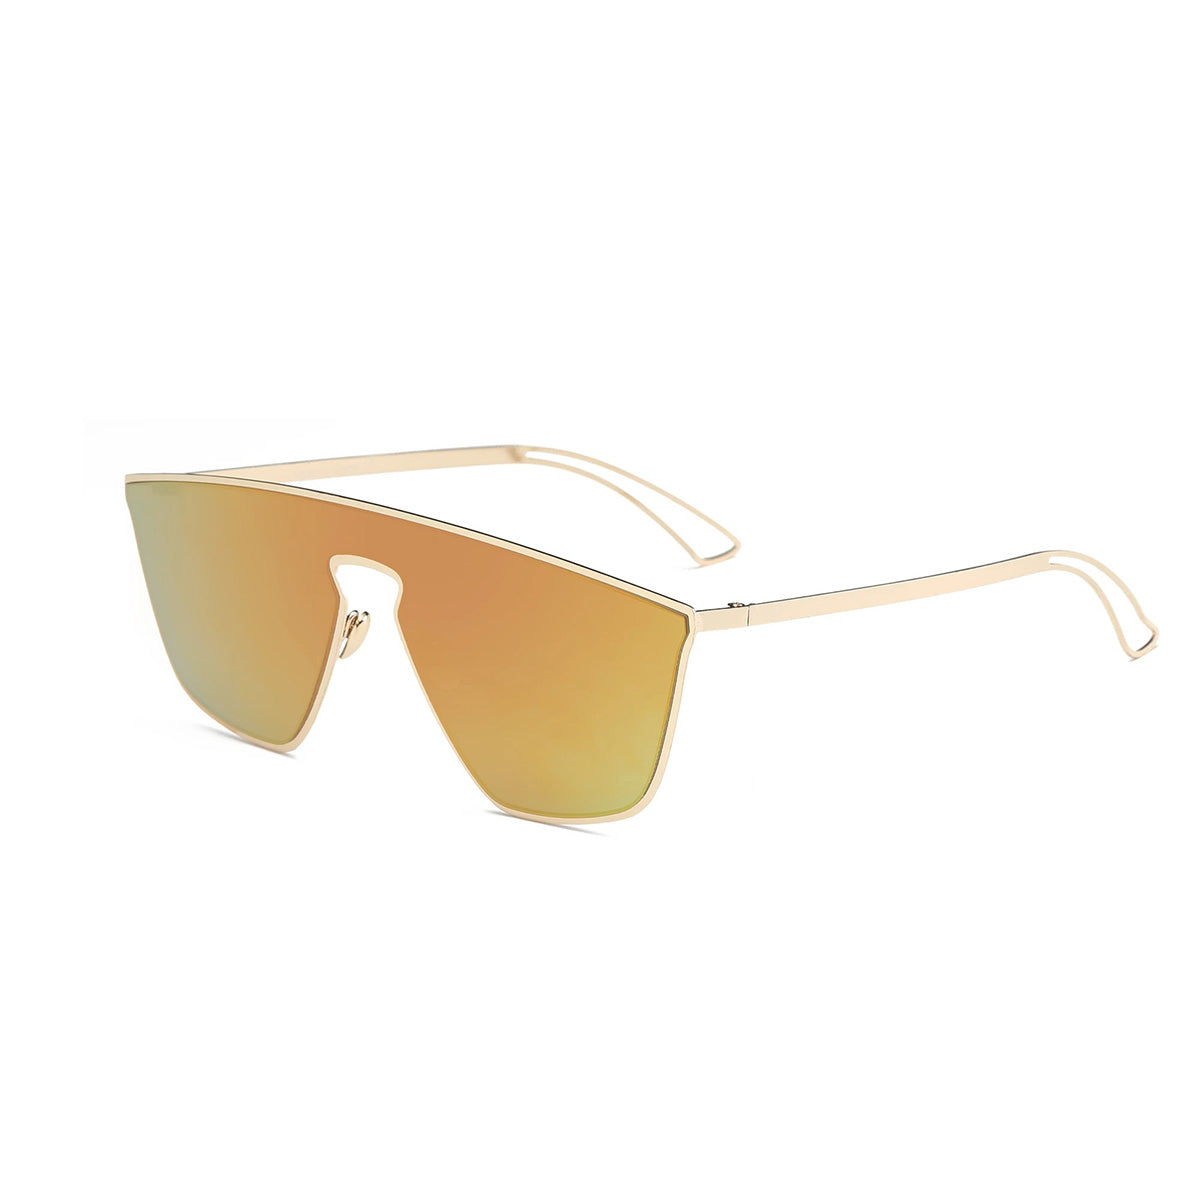 Flat Sunglasses - iBESTEST.com